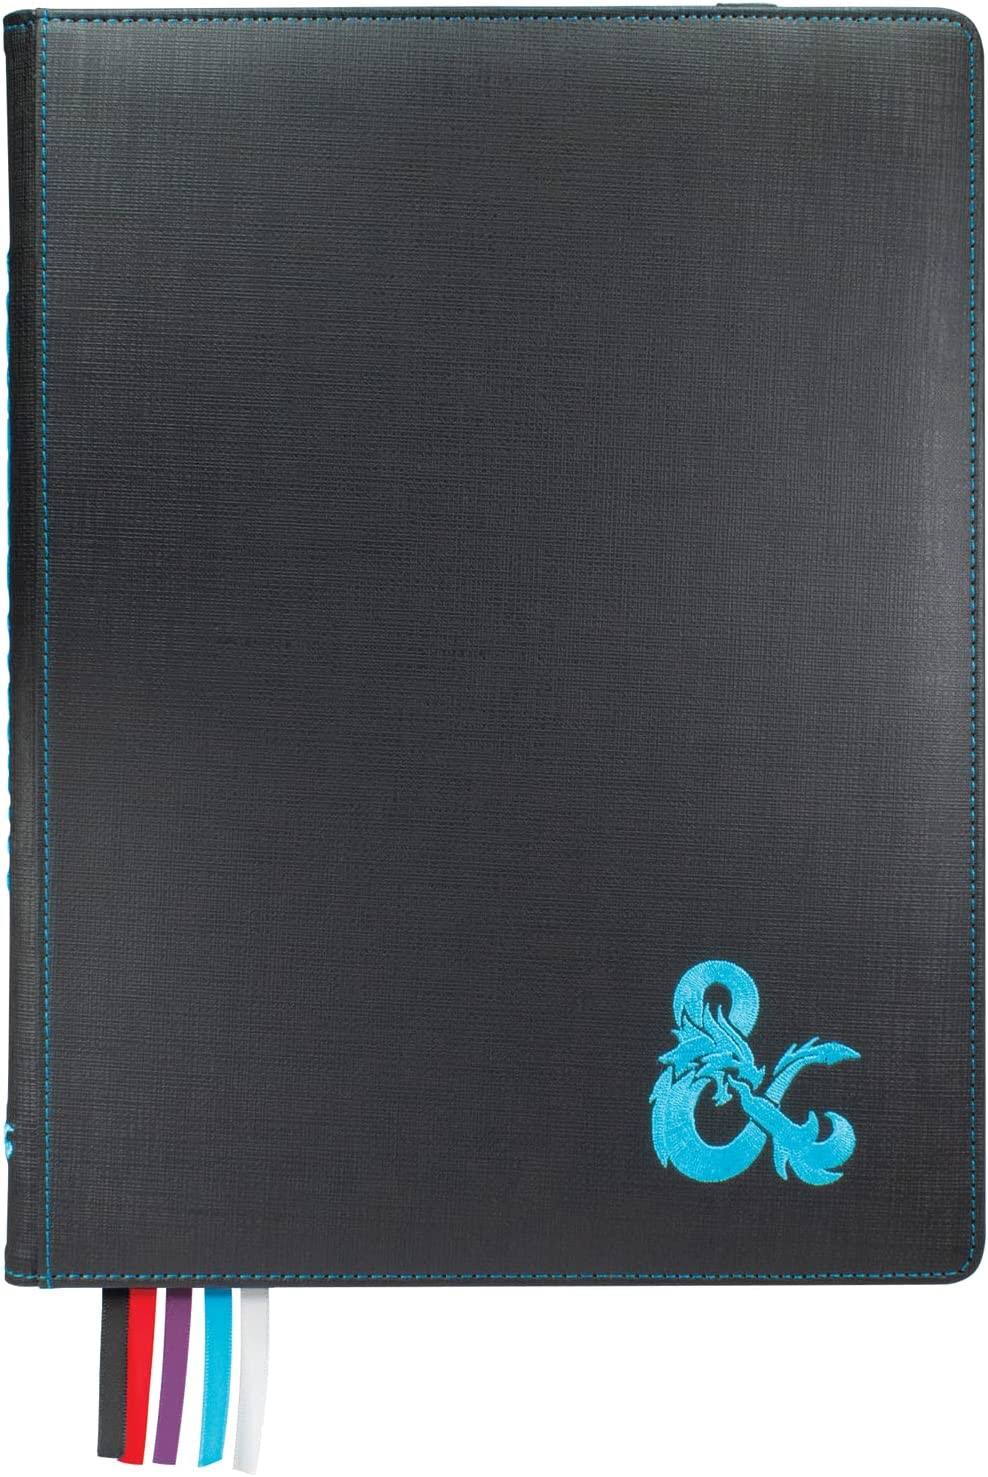 Dungeons & Dragons Monster Manual Premium Book Cover